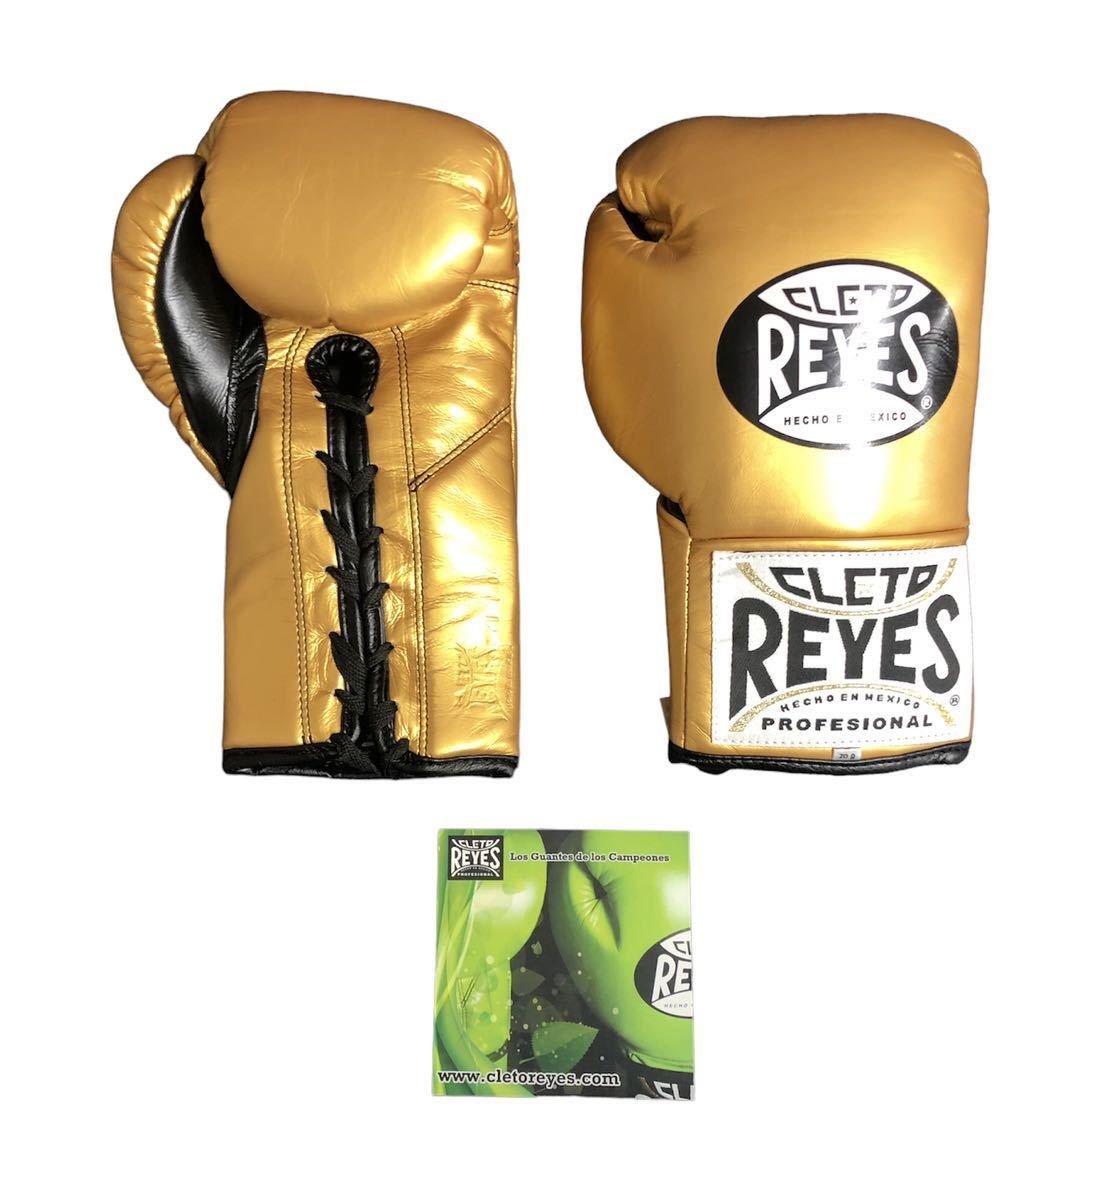 Reyes レイジェス ボクシンググローブ 14oz ゴールド - ボクシング